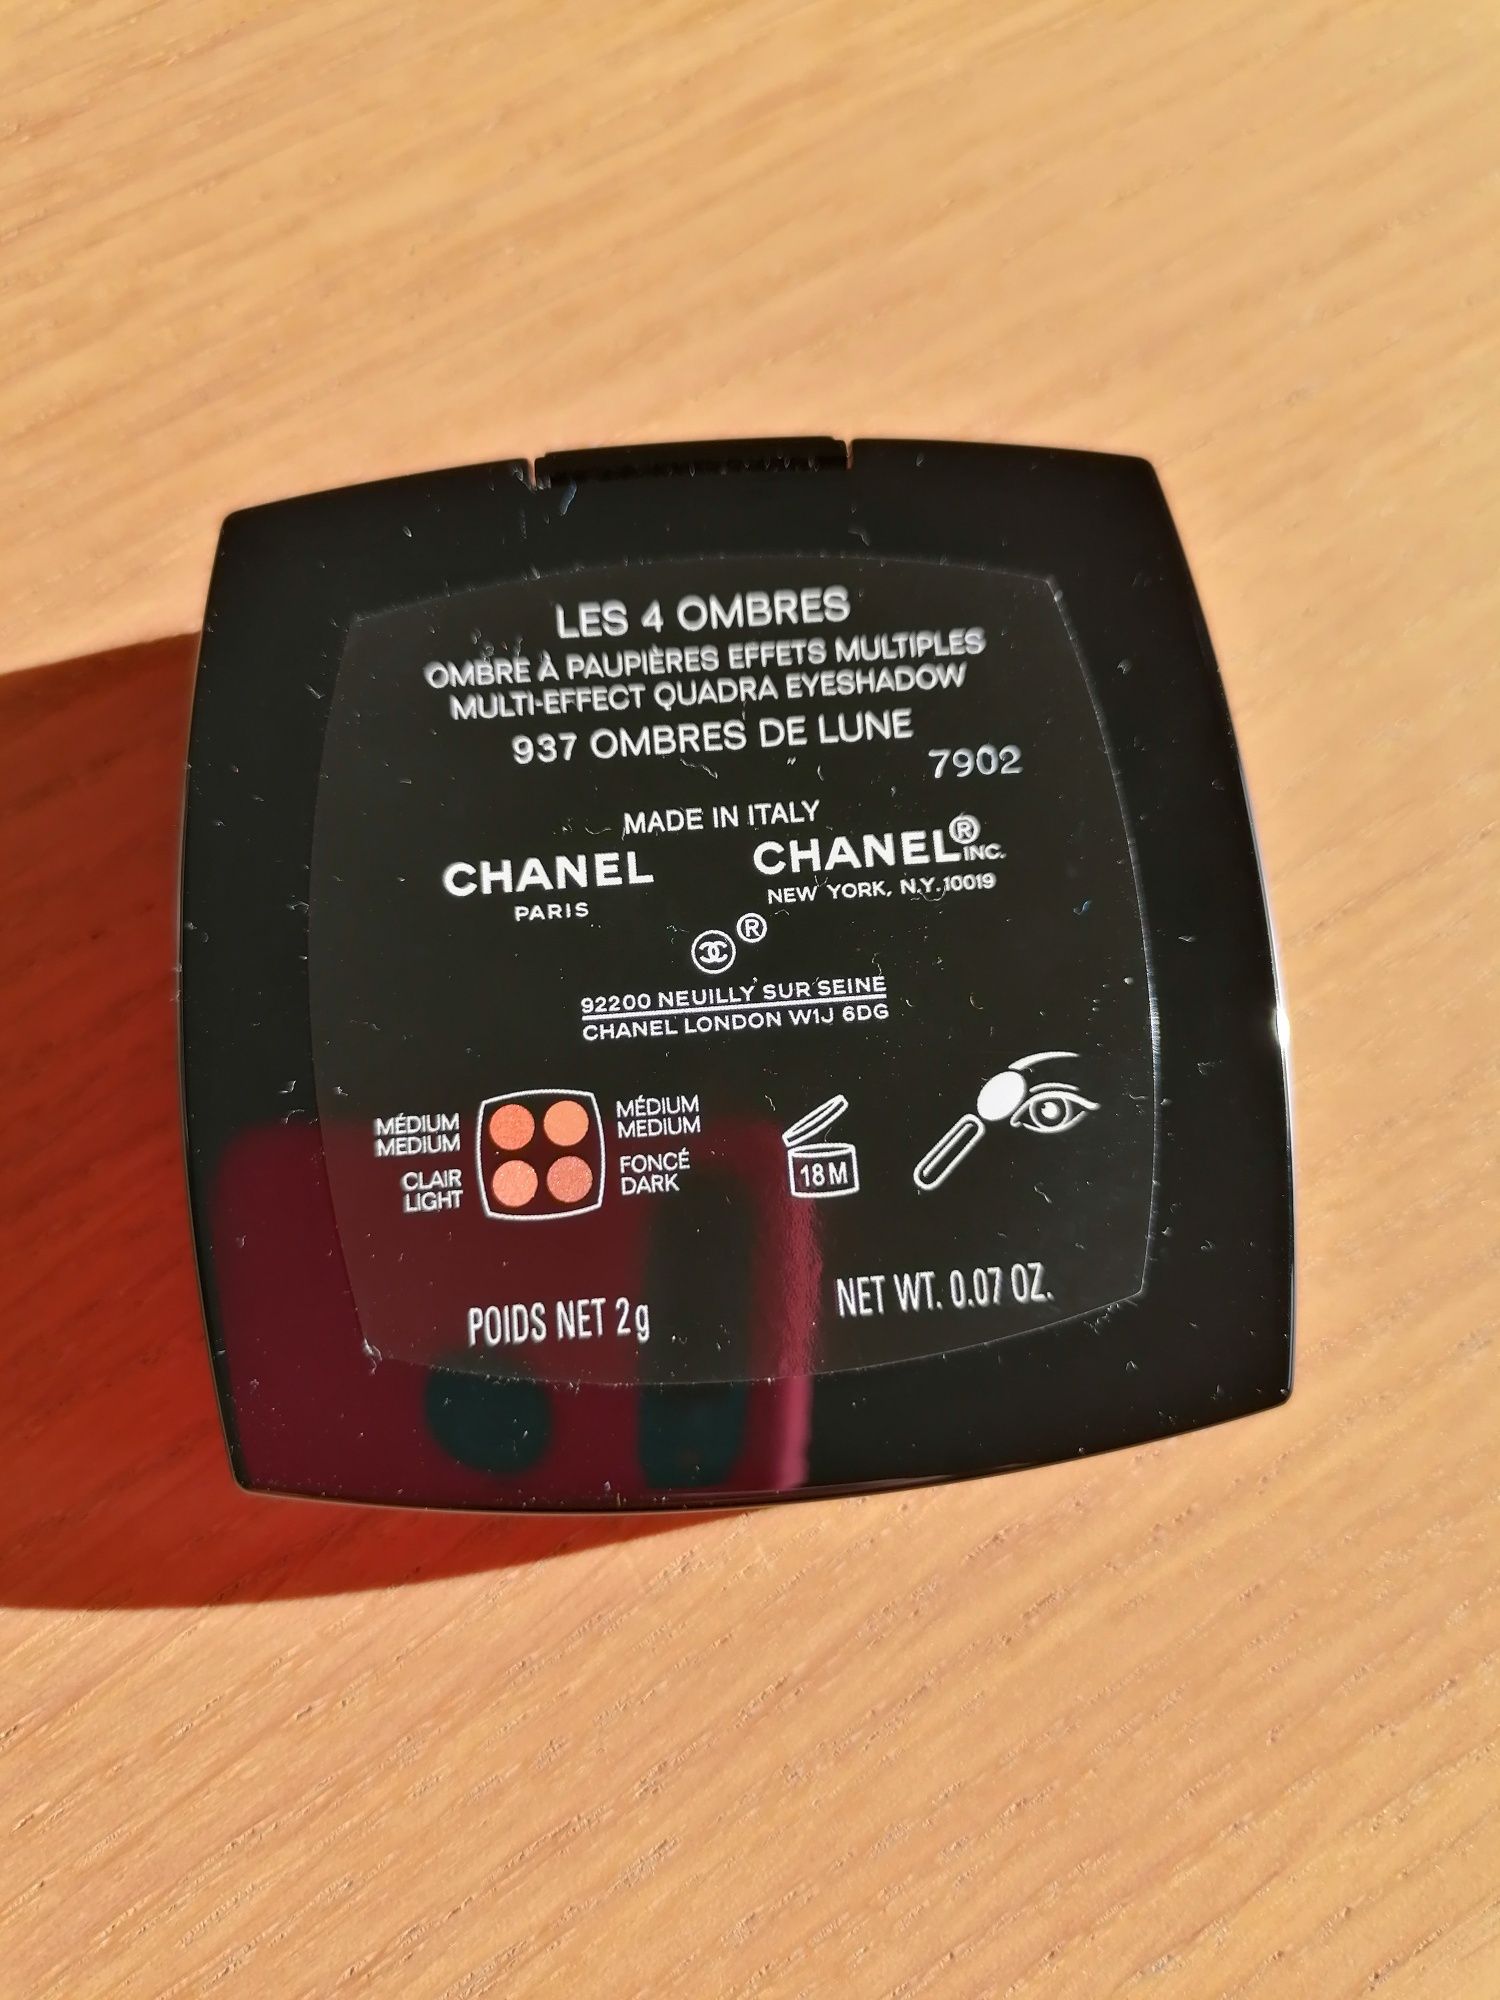 Chanel-Les 4 ombres - 937 Ombres de Lune Roscani • OLX.ro